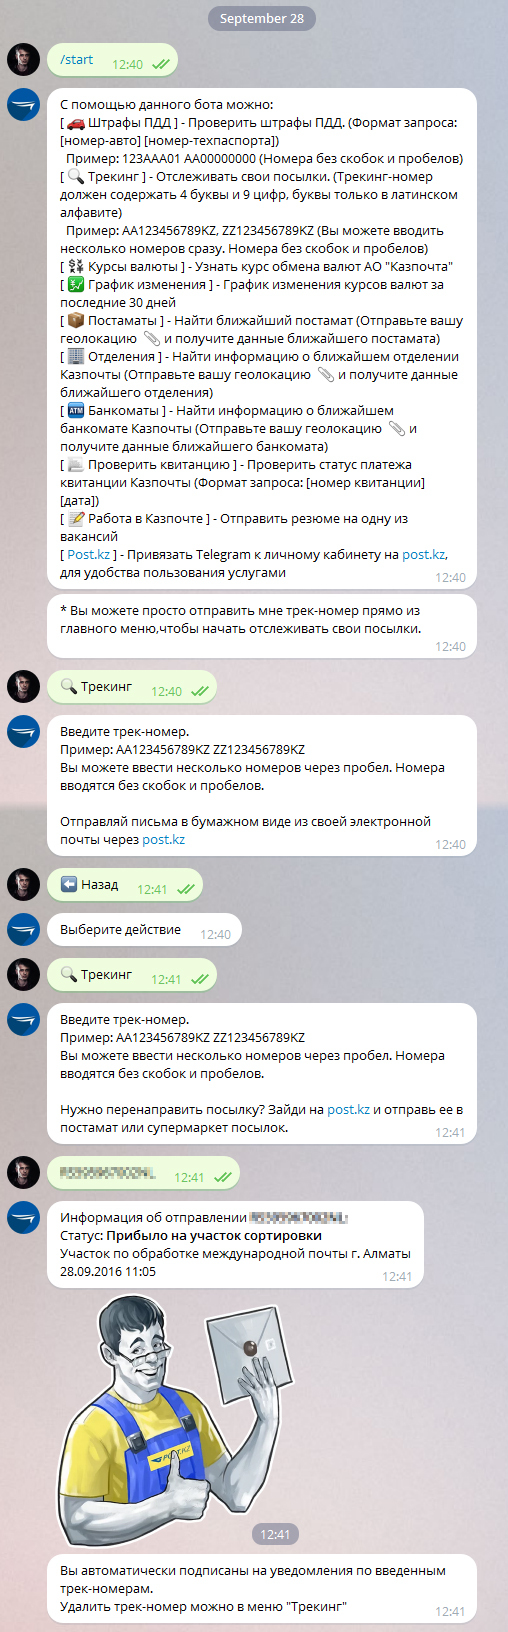 Kazpost pleases with its innovations - mail, , Telegram, Telegram bot, Longpost